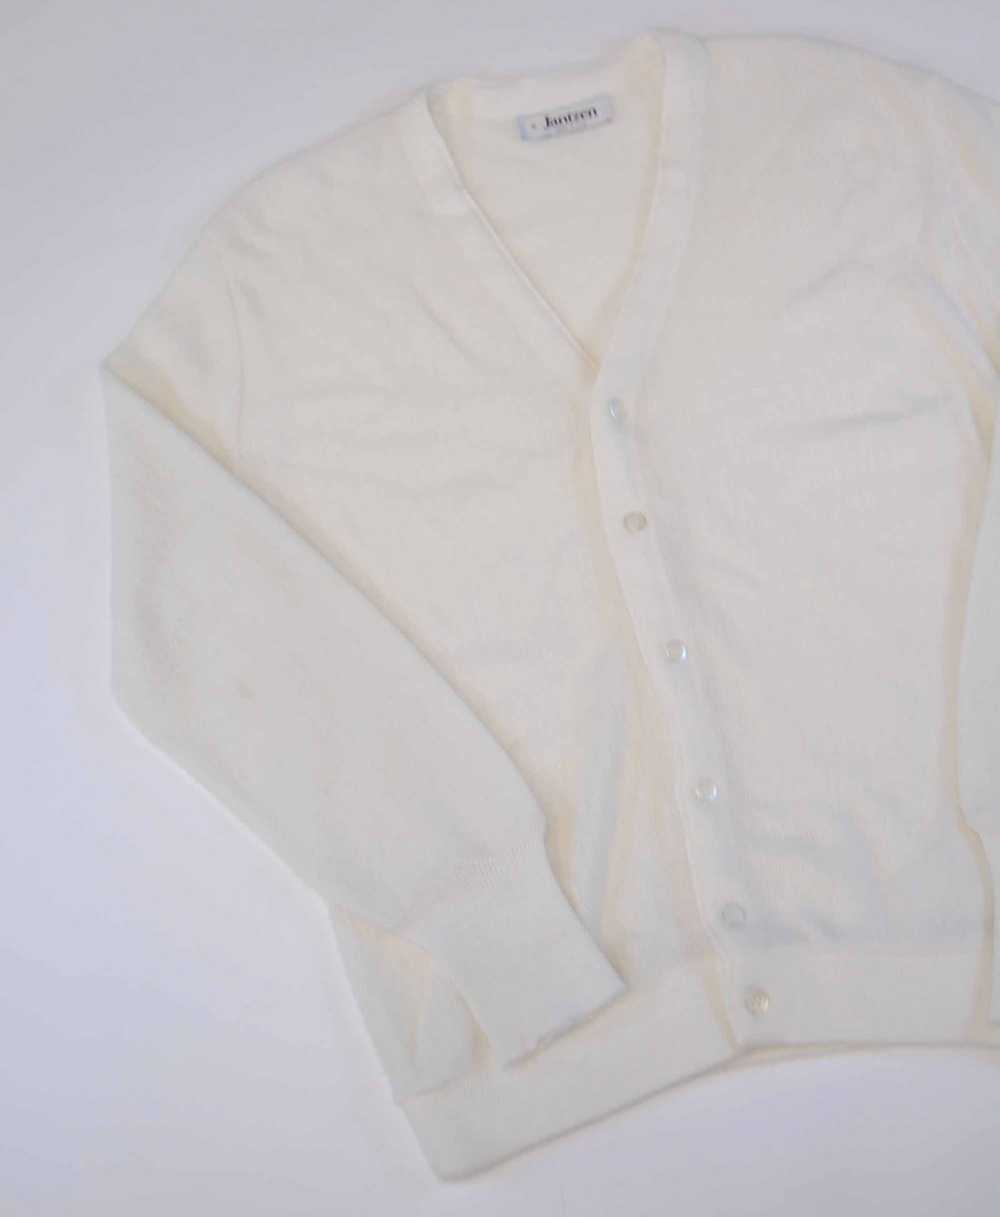 Vintage 80’s Knit Cardigan Sweater - image 2